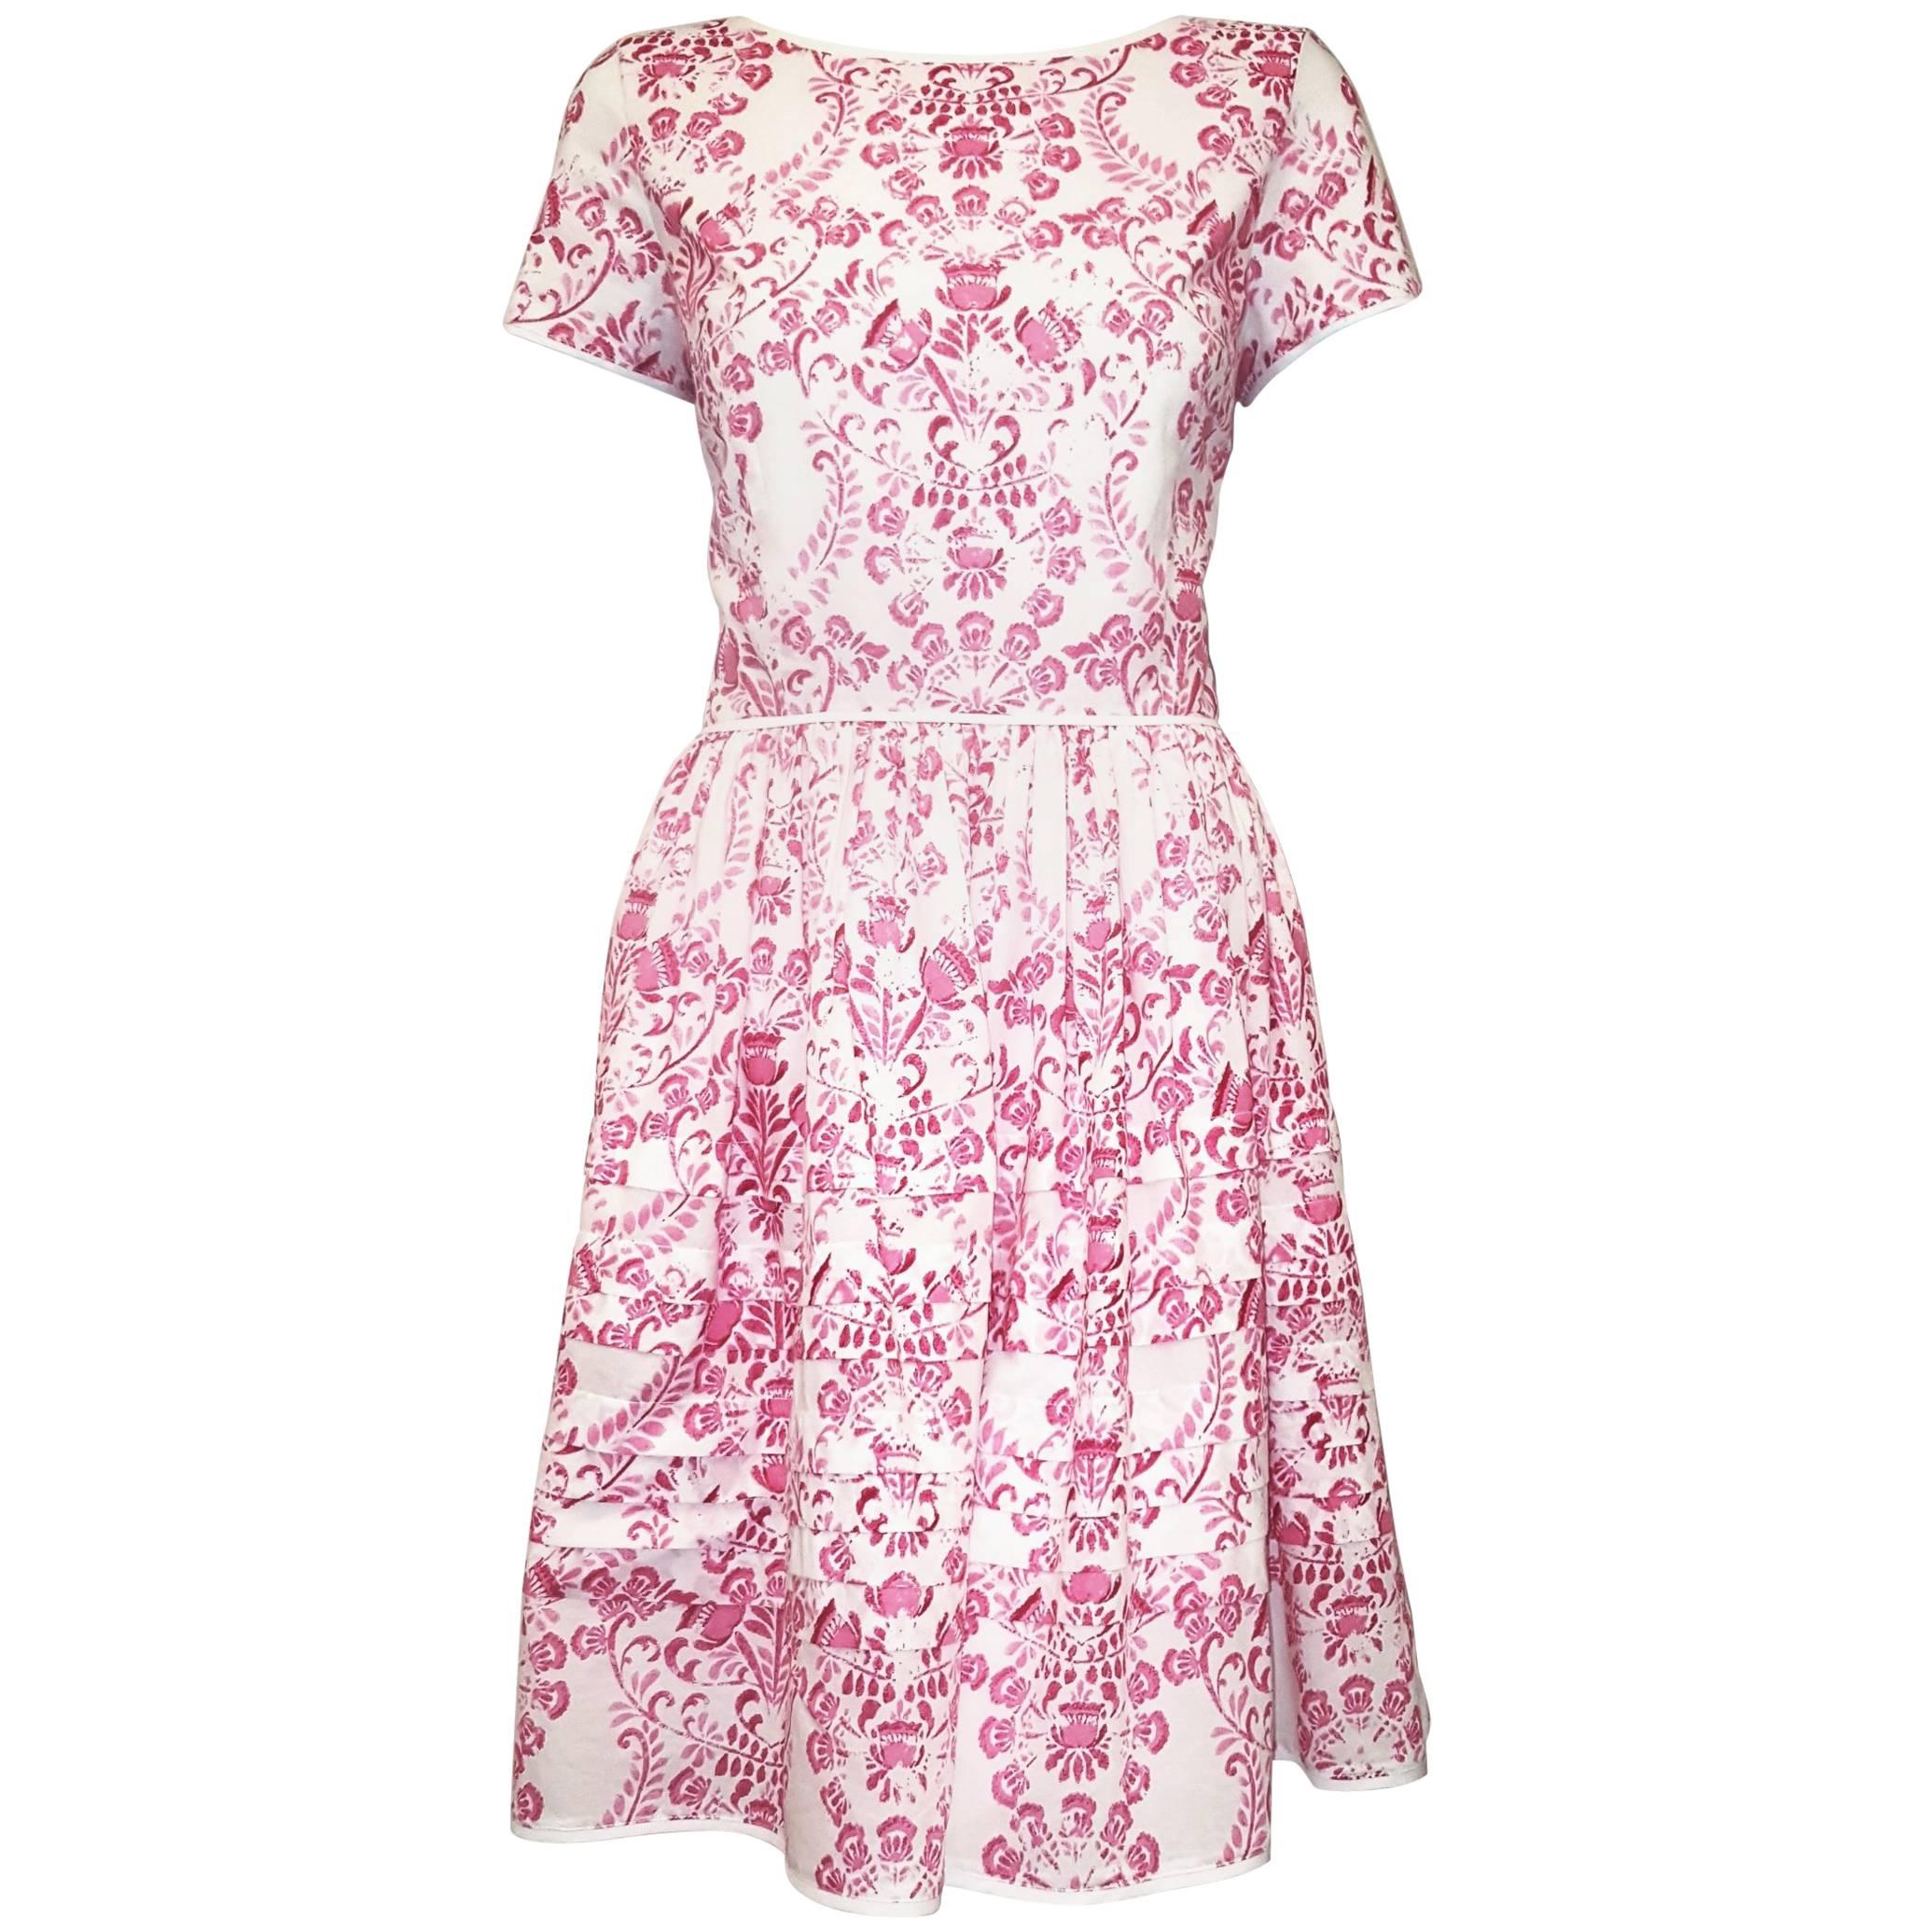 Oscar de la Renta Cotton Pink & White Short Sleeve Dress with Gathered Skirt